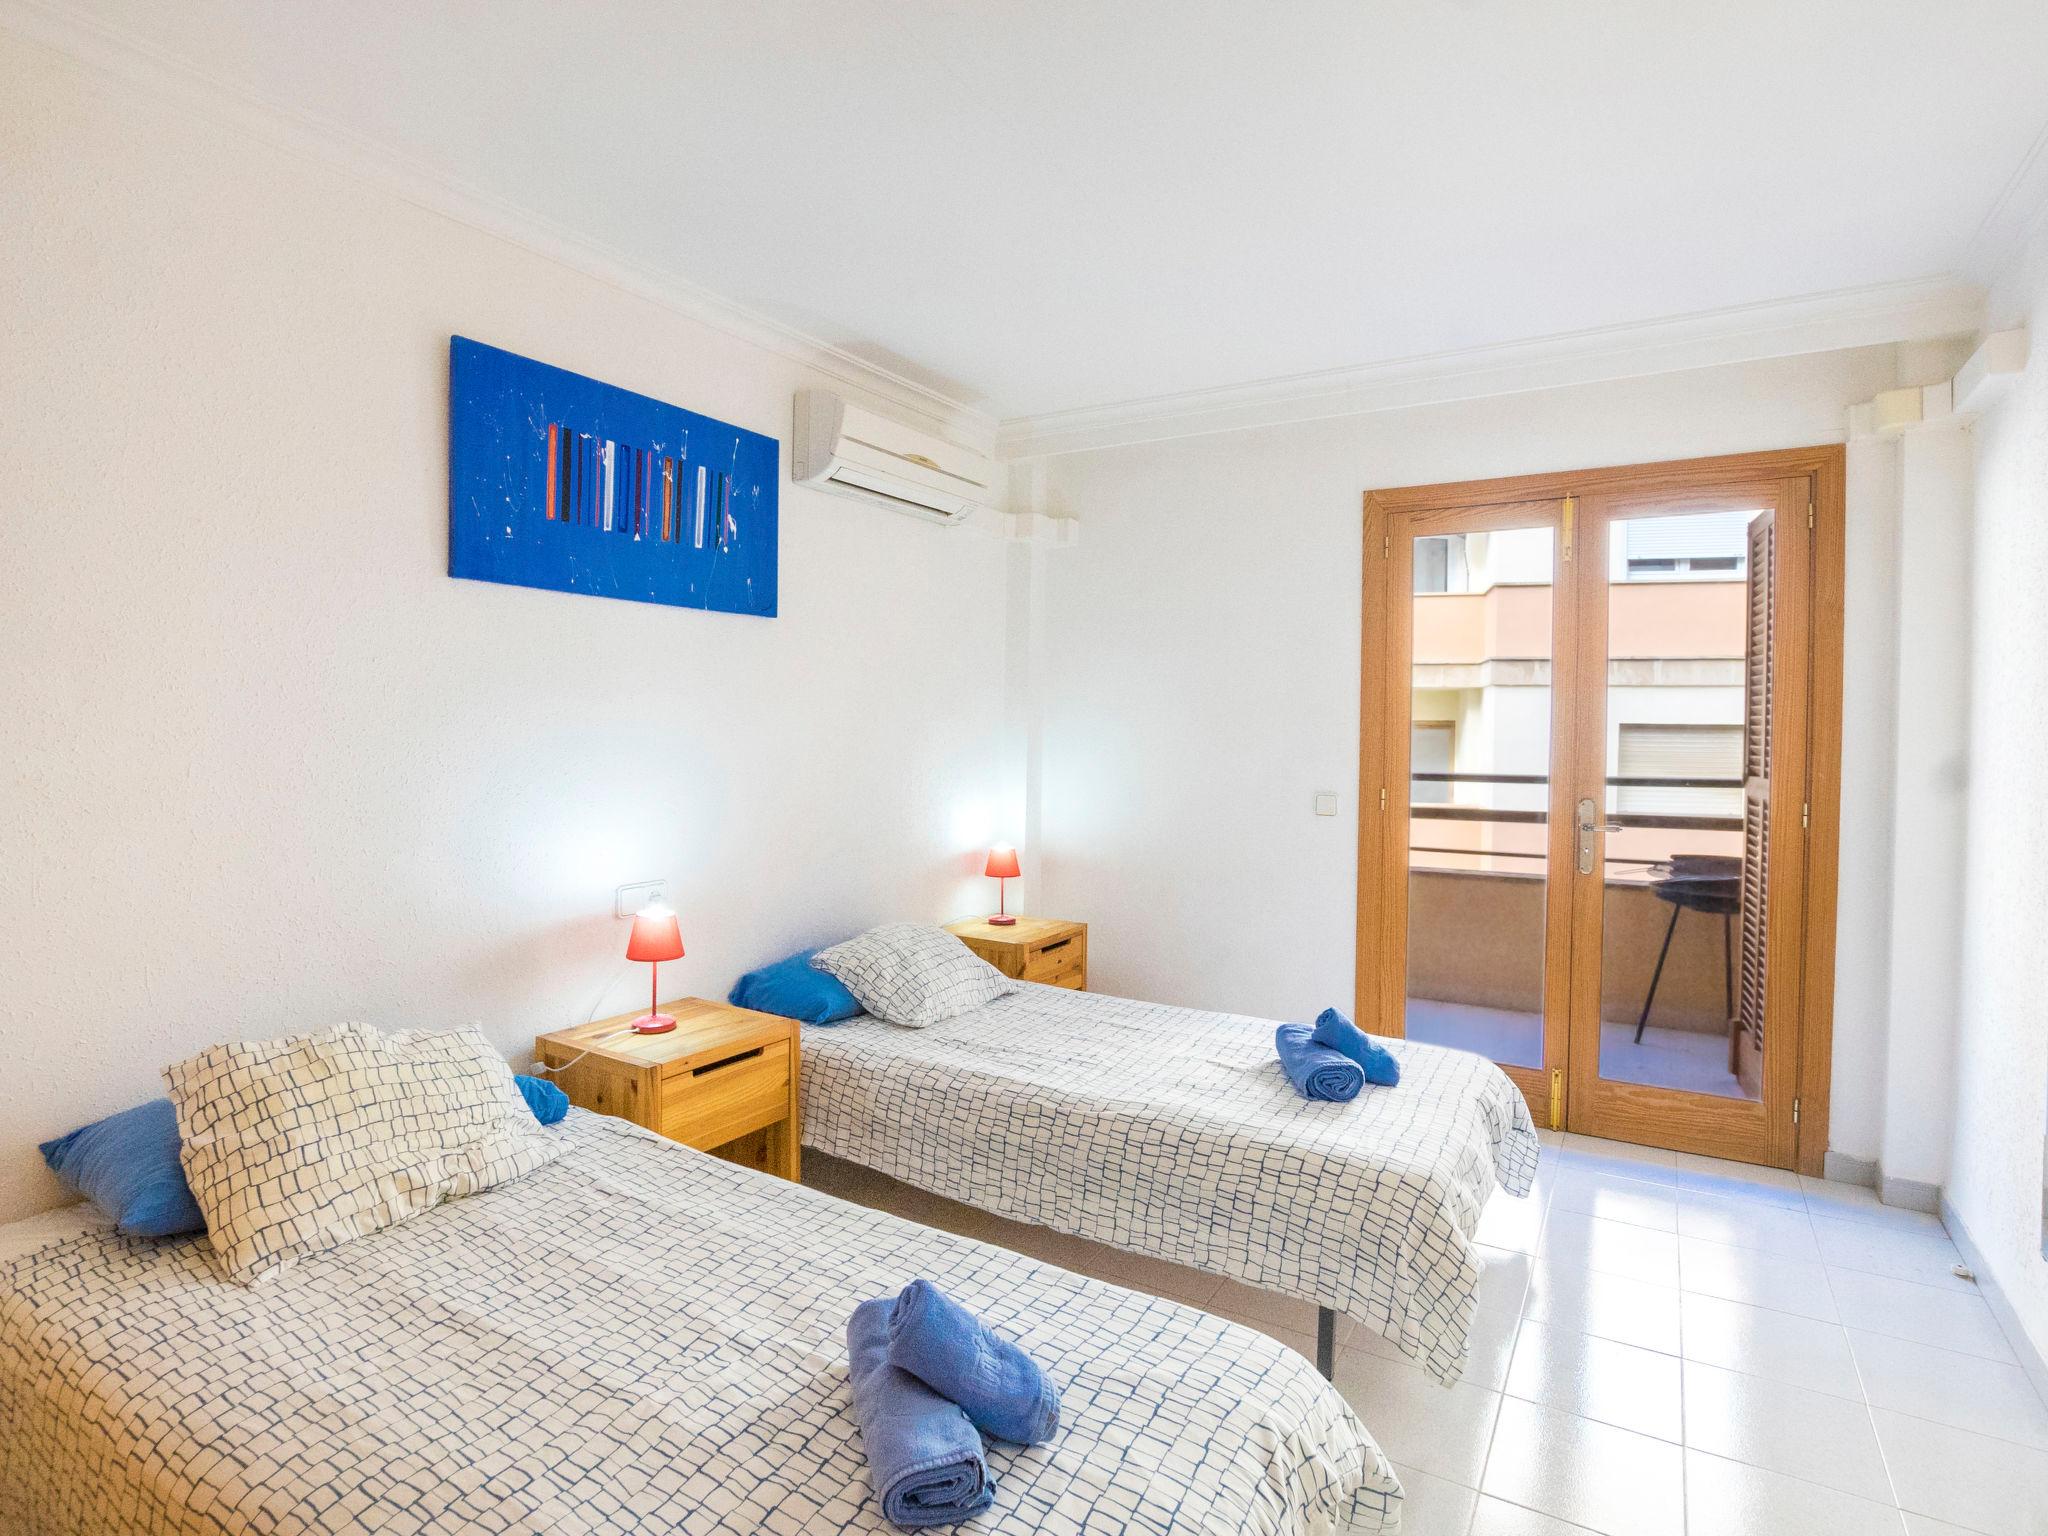 Photo 13 - Appartement de 3 chambres à Alcúdia avec vues à la mer